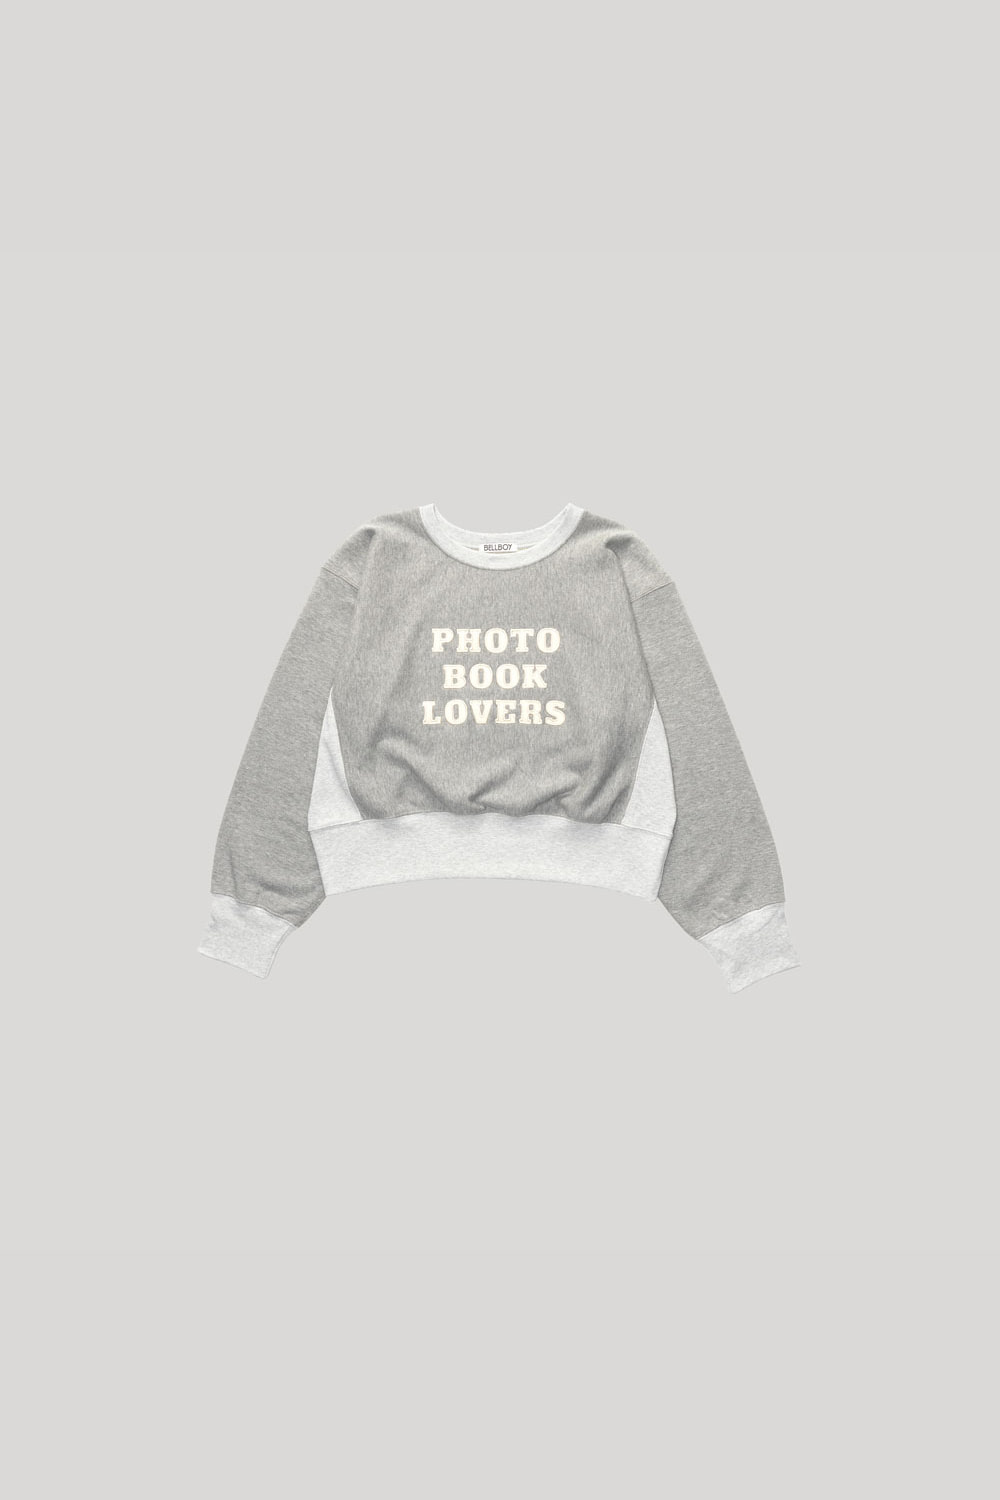 Photobook Lovers Sweatshirts - Boxer (Cropped) 티셔츠, 워시드 헤비웨이트 티셔츠, 옥스포드셔츠, 버튼다운셔츠, 메신저백, 캔버스백